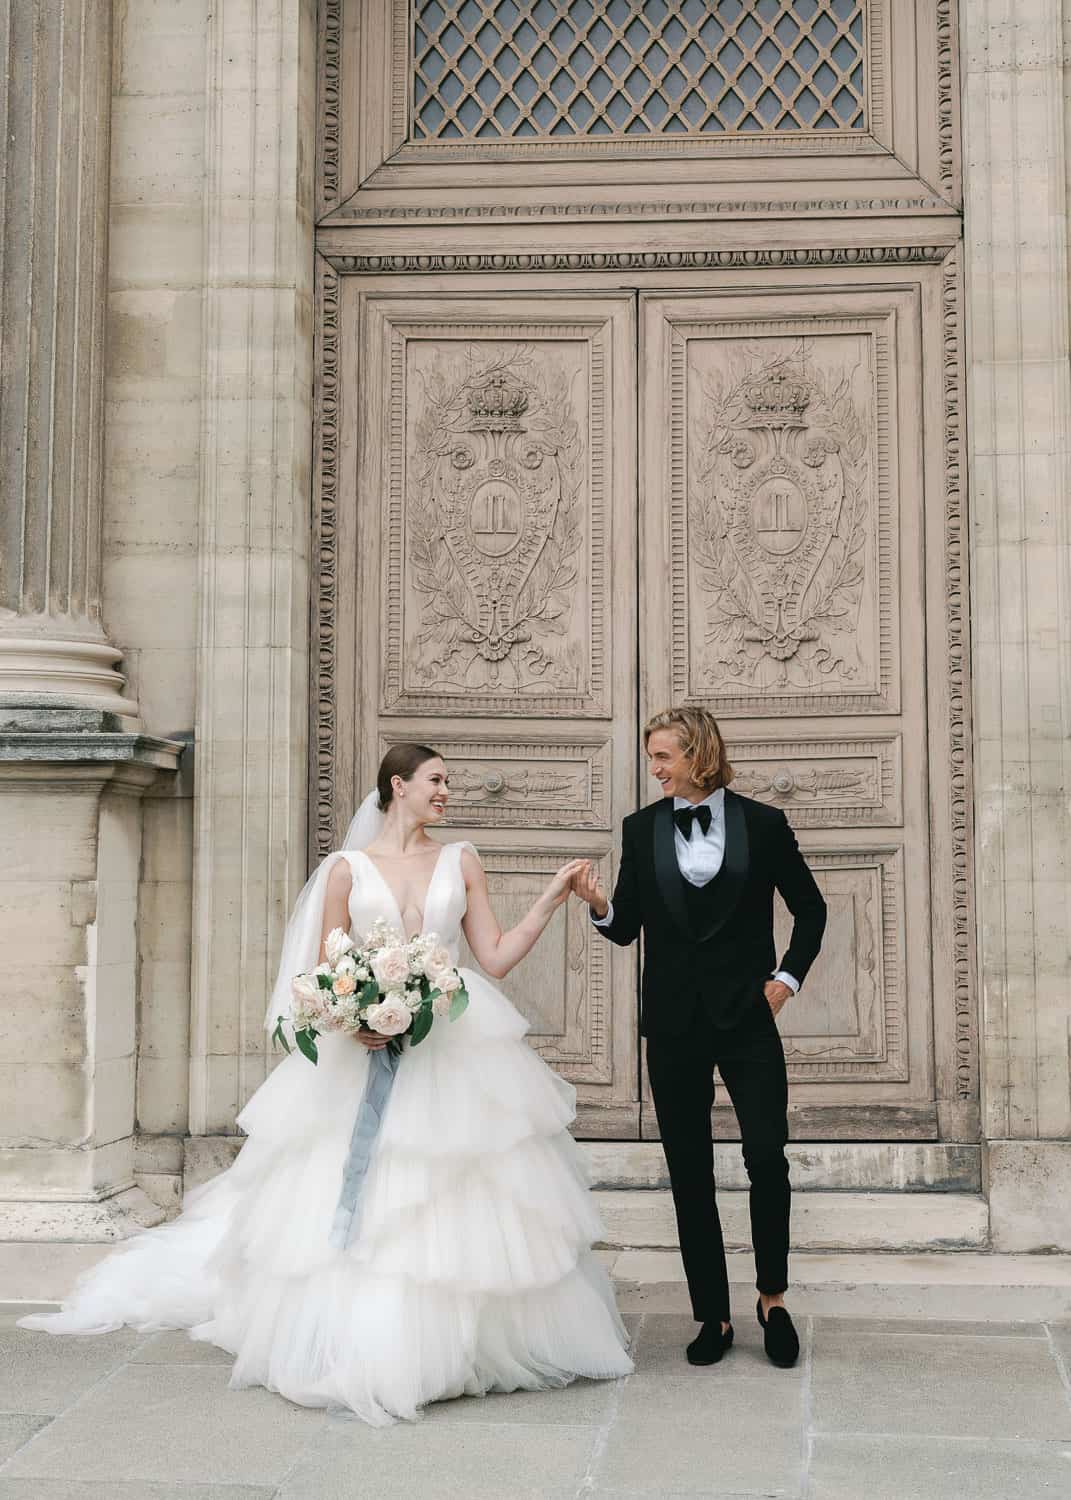 The Louvre Wedding Photos, Paris Wedding Photos, Paris Wedding Photographer, Theresa Kelly